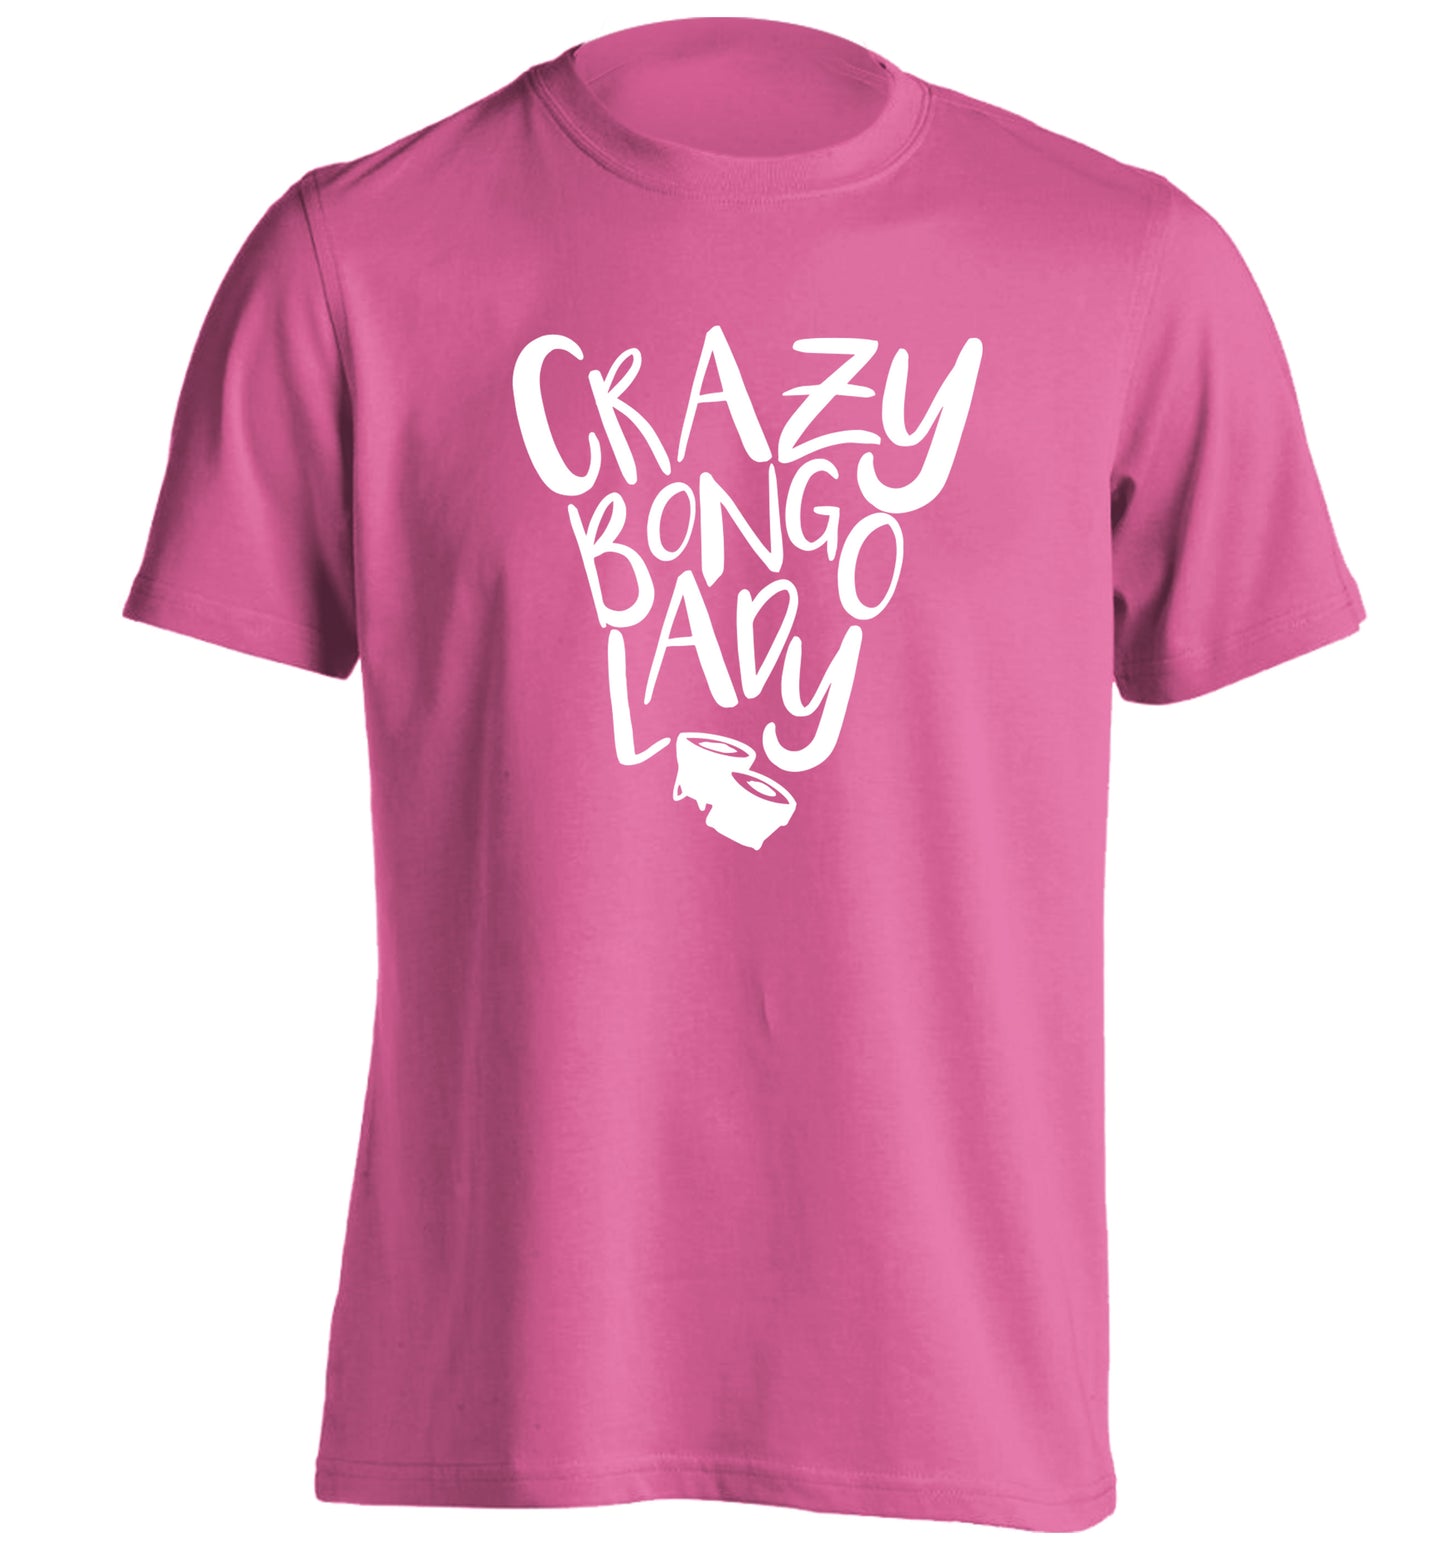 Crazy bongo lady adults unisex pink Tshirt 2XL